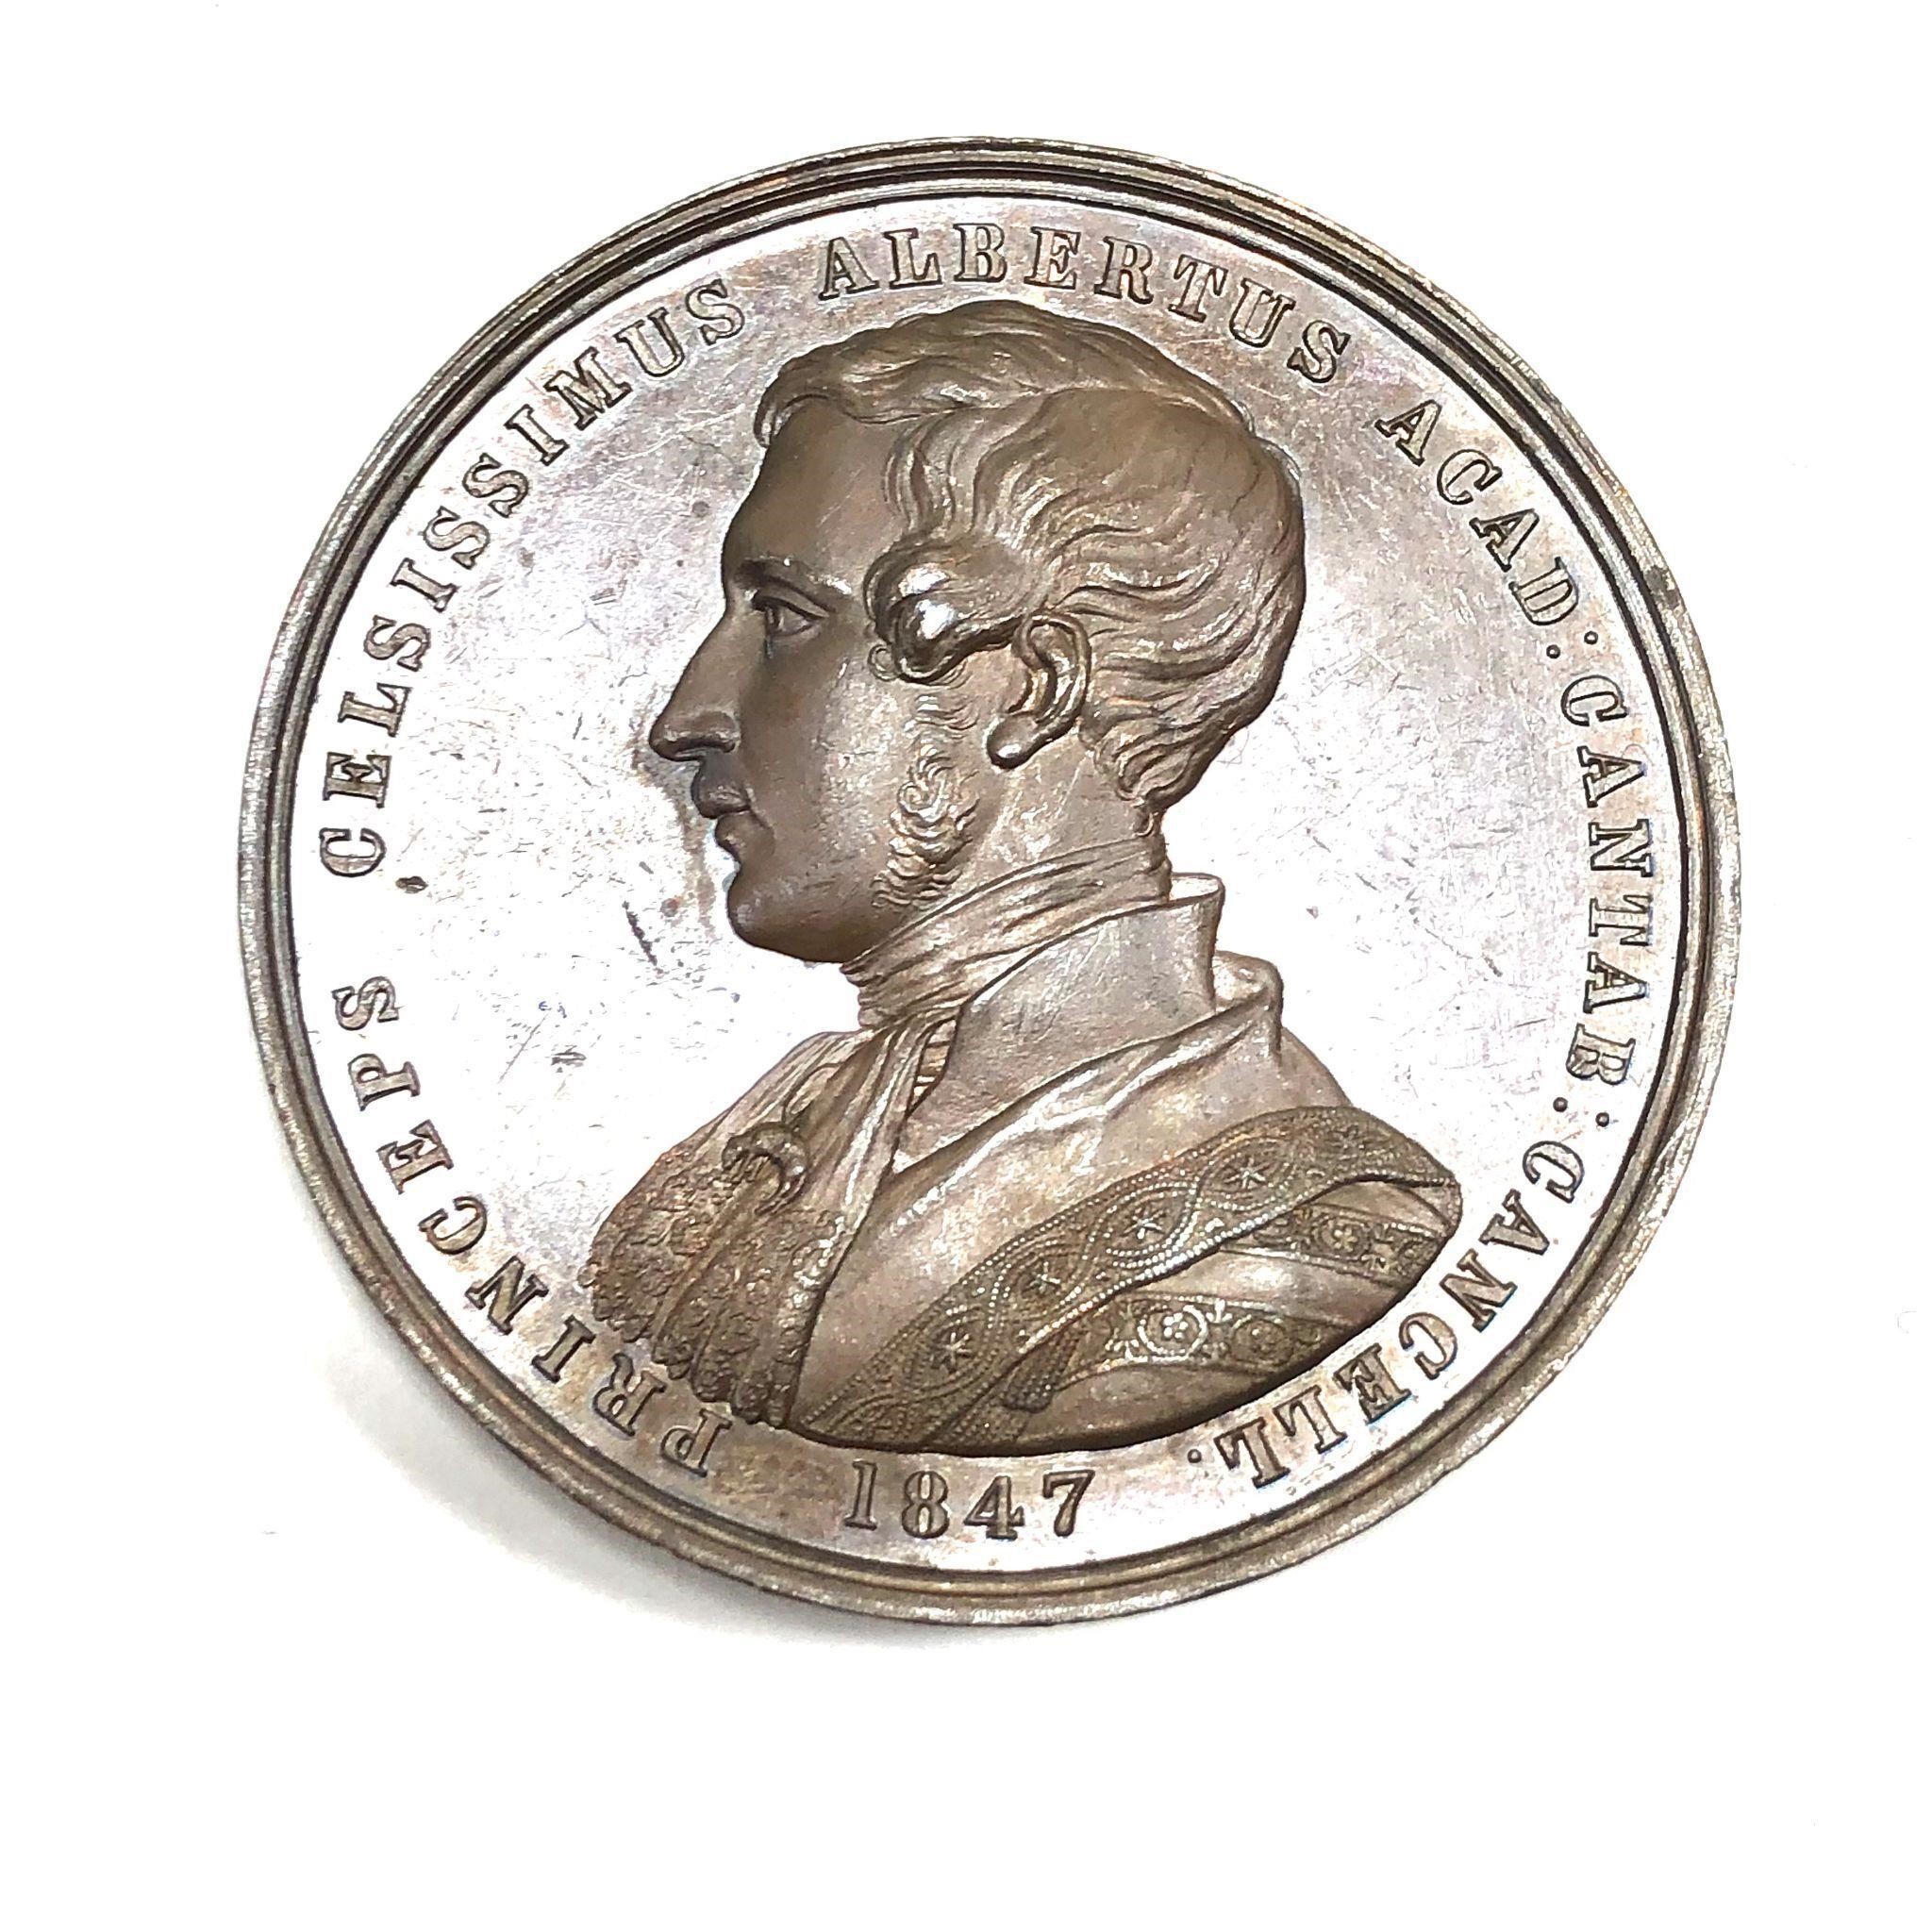 1847 ALBERTUS S ACAD: GET THE HIGHEST GAME Medal